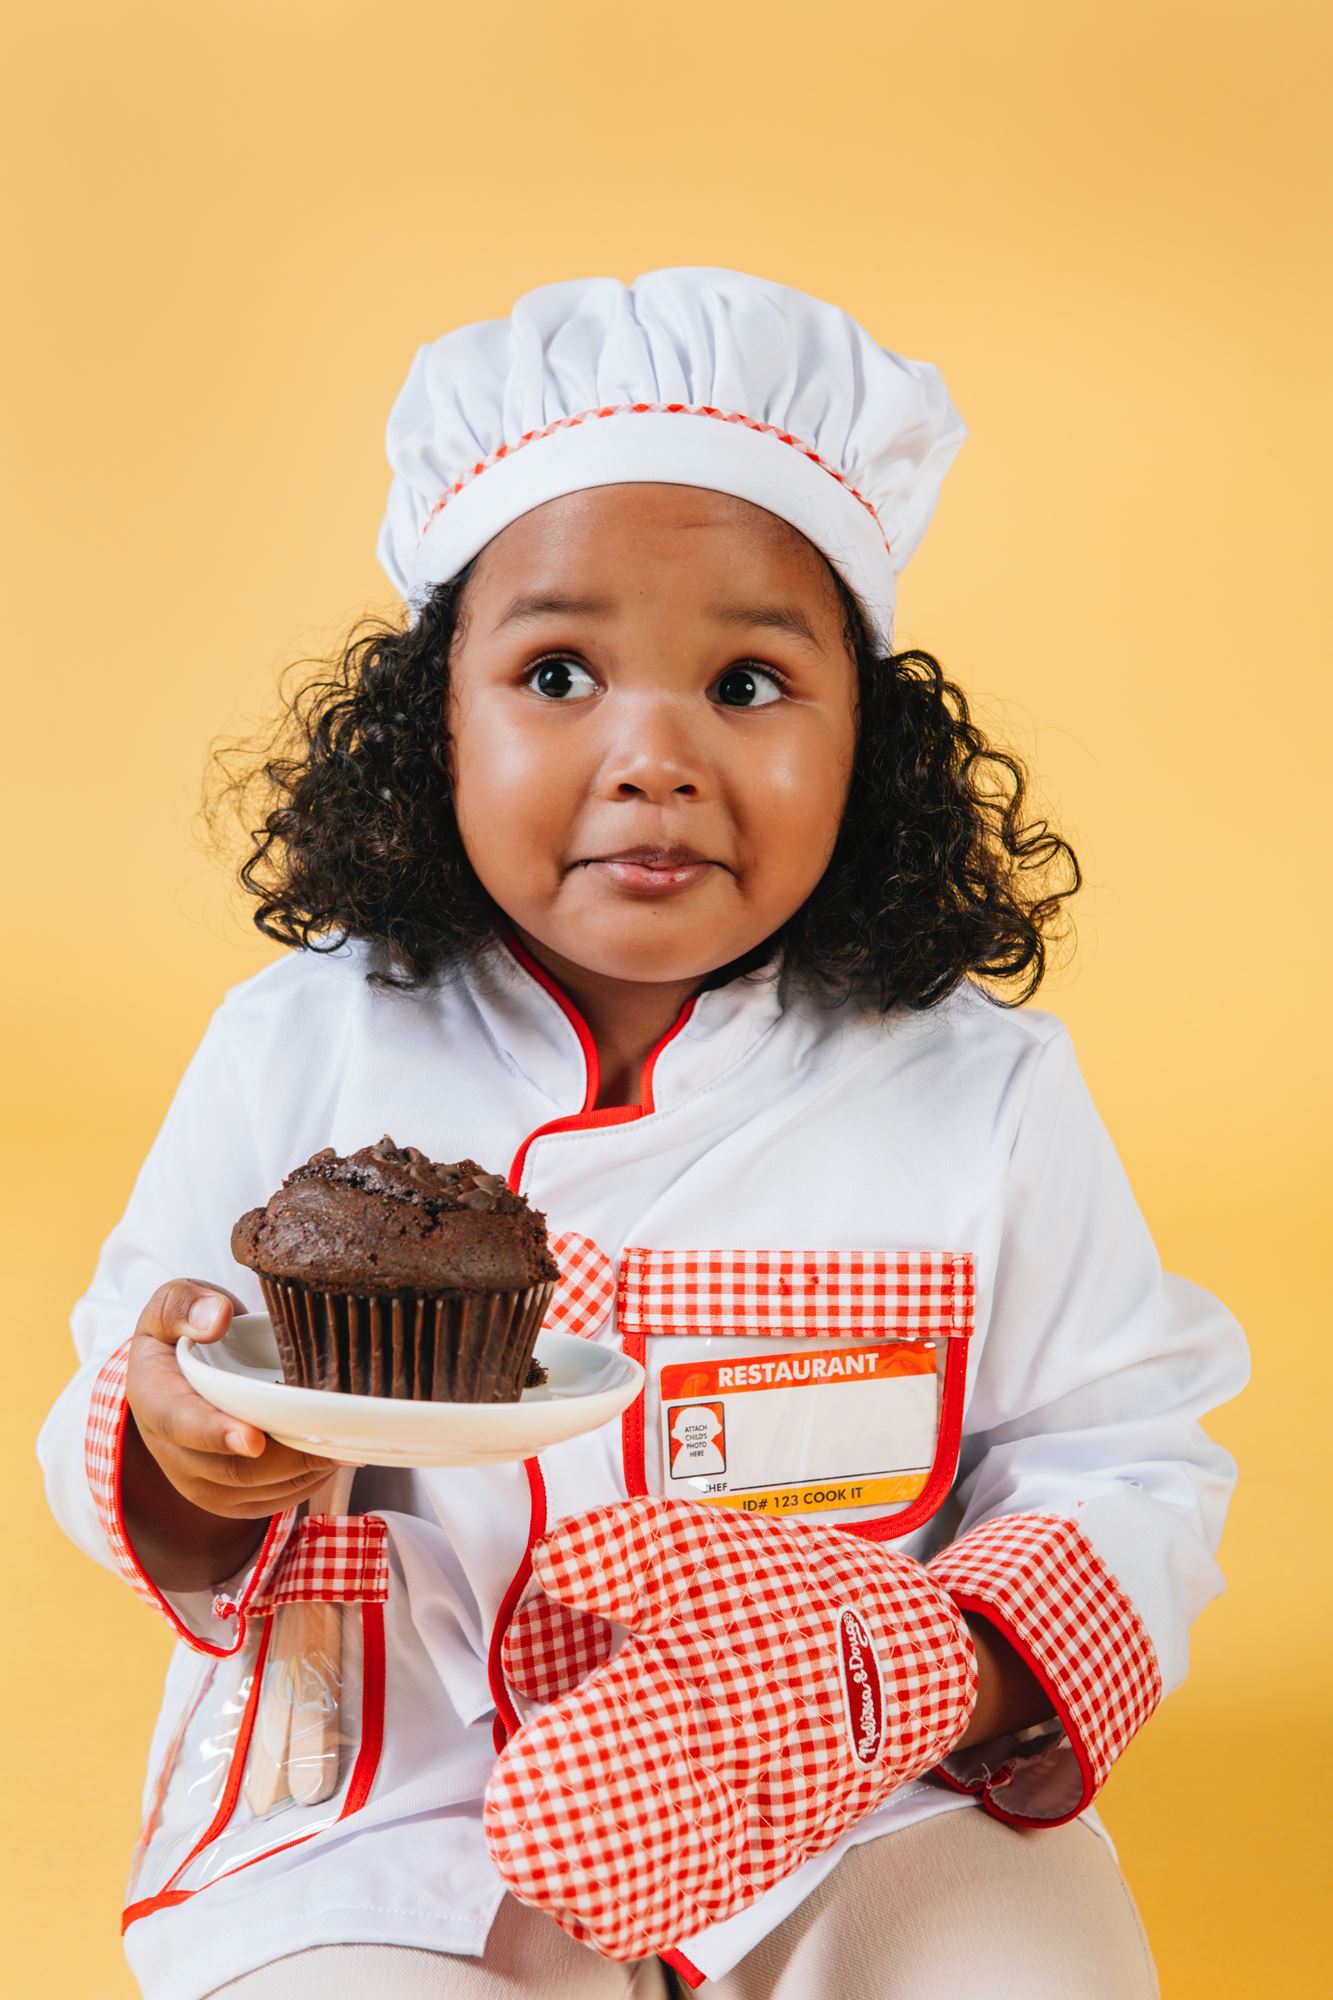 Ag-venturous KIDS Cupcake Contest